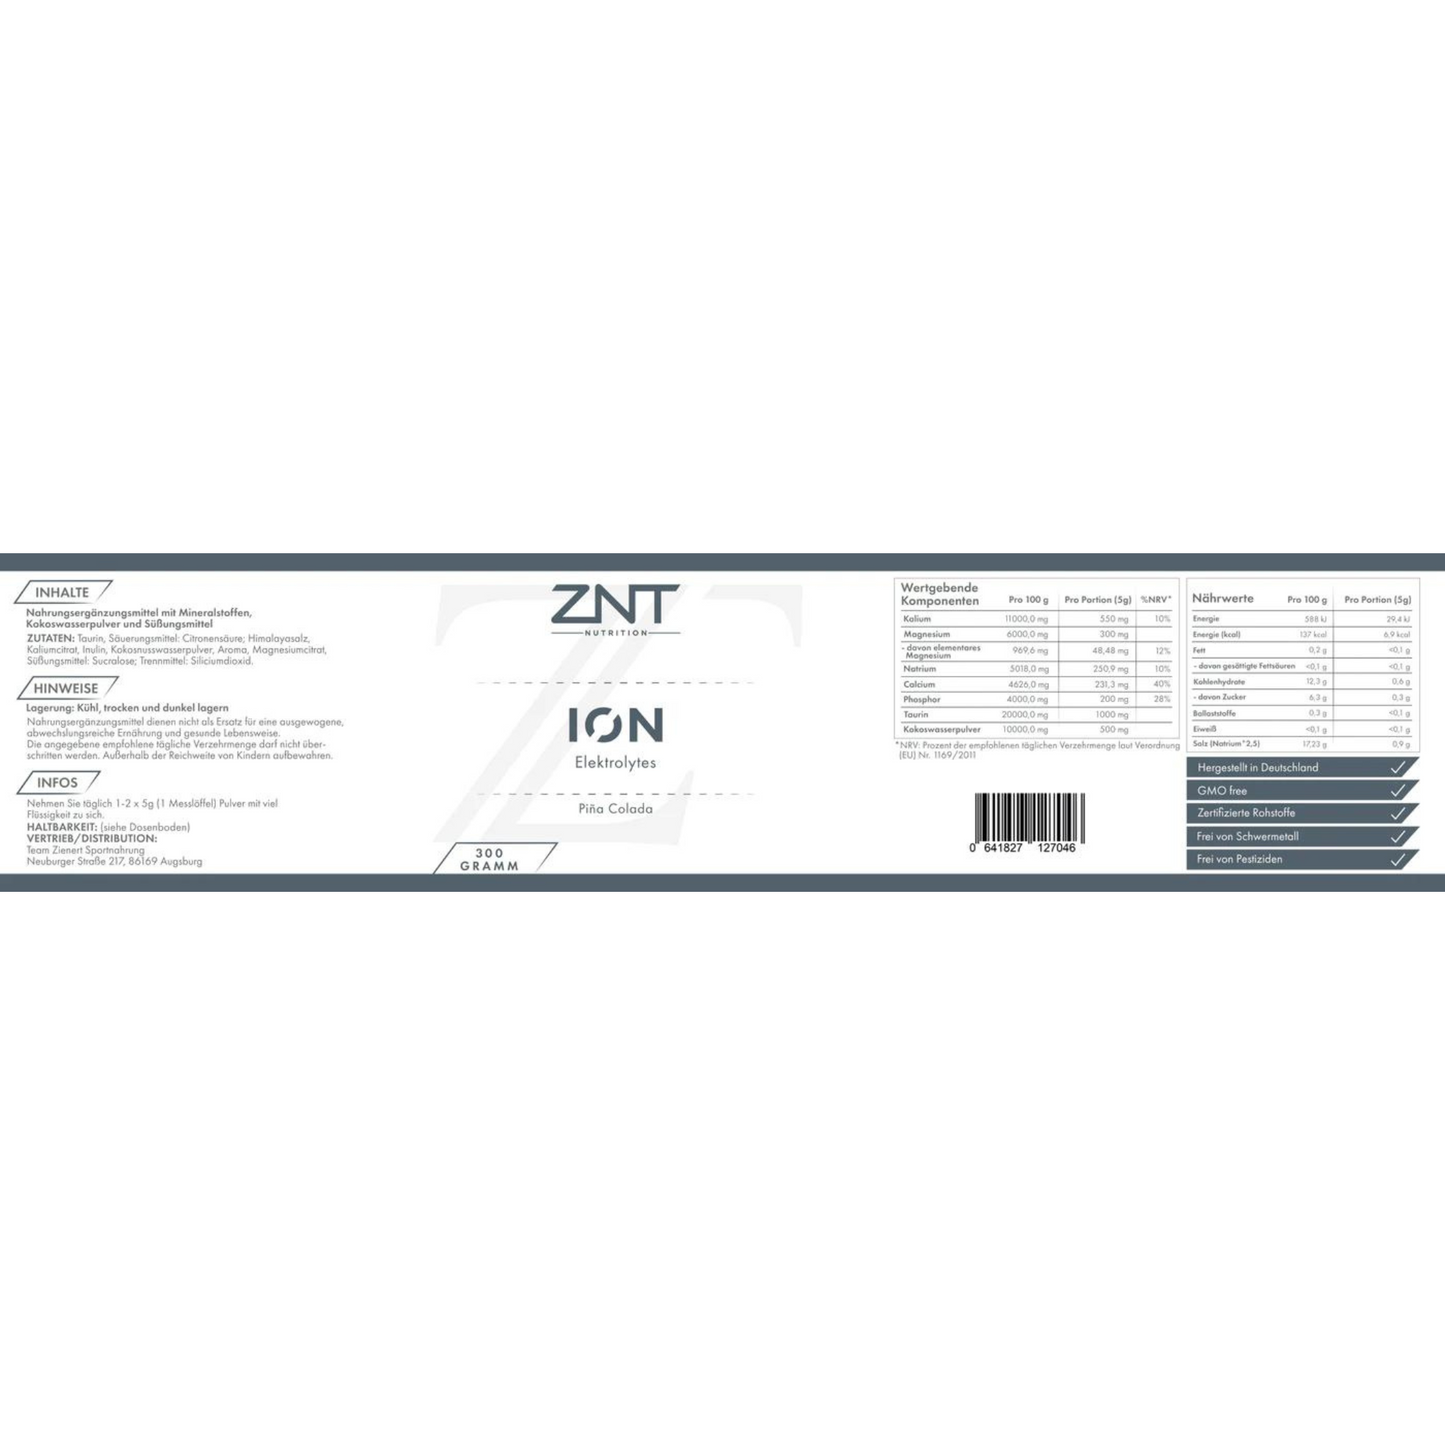 ZNT Ion Electrolytes+ 300g